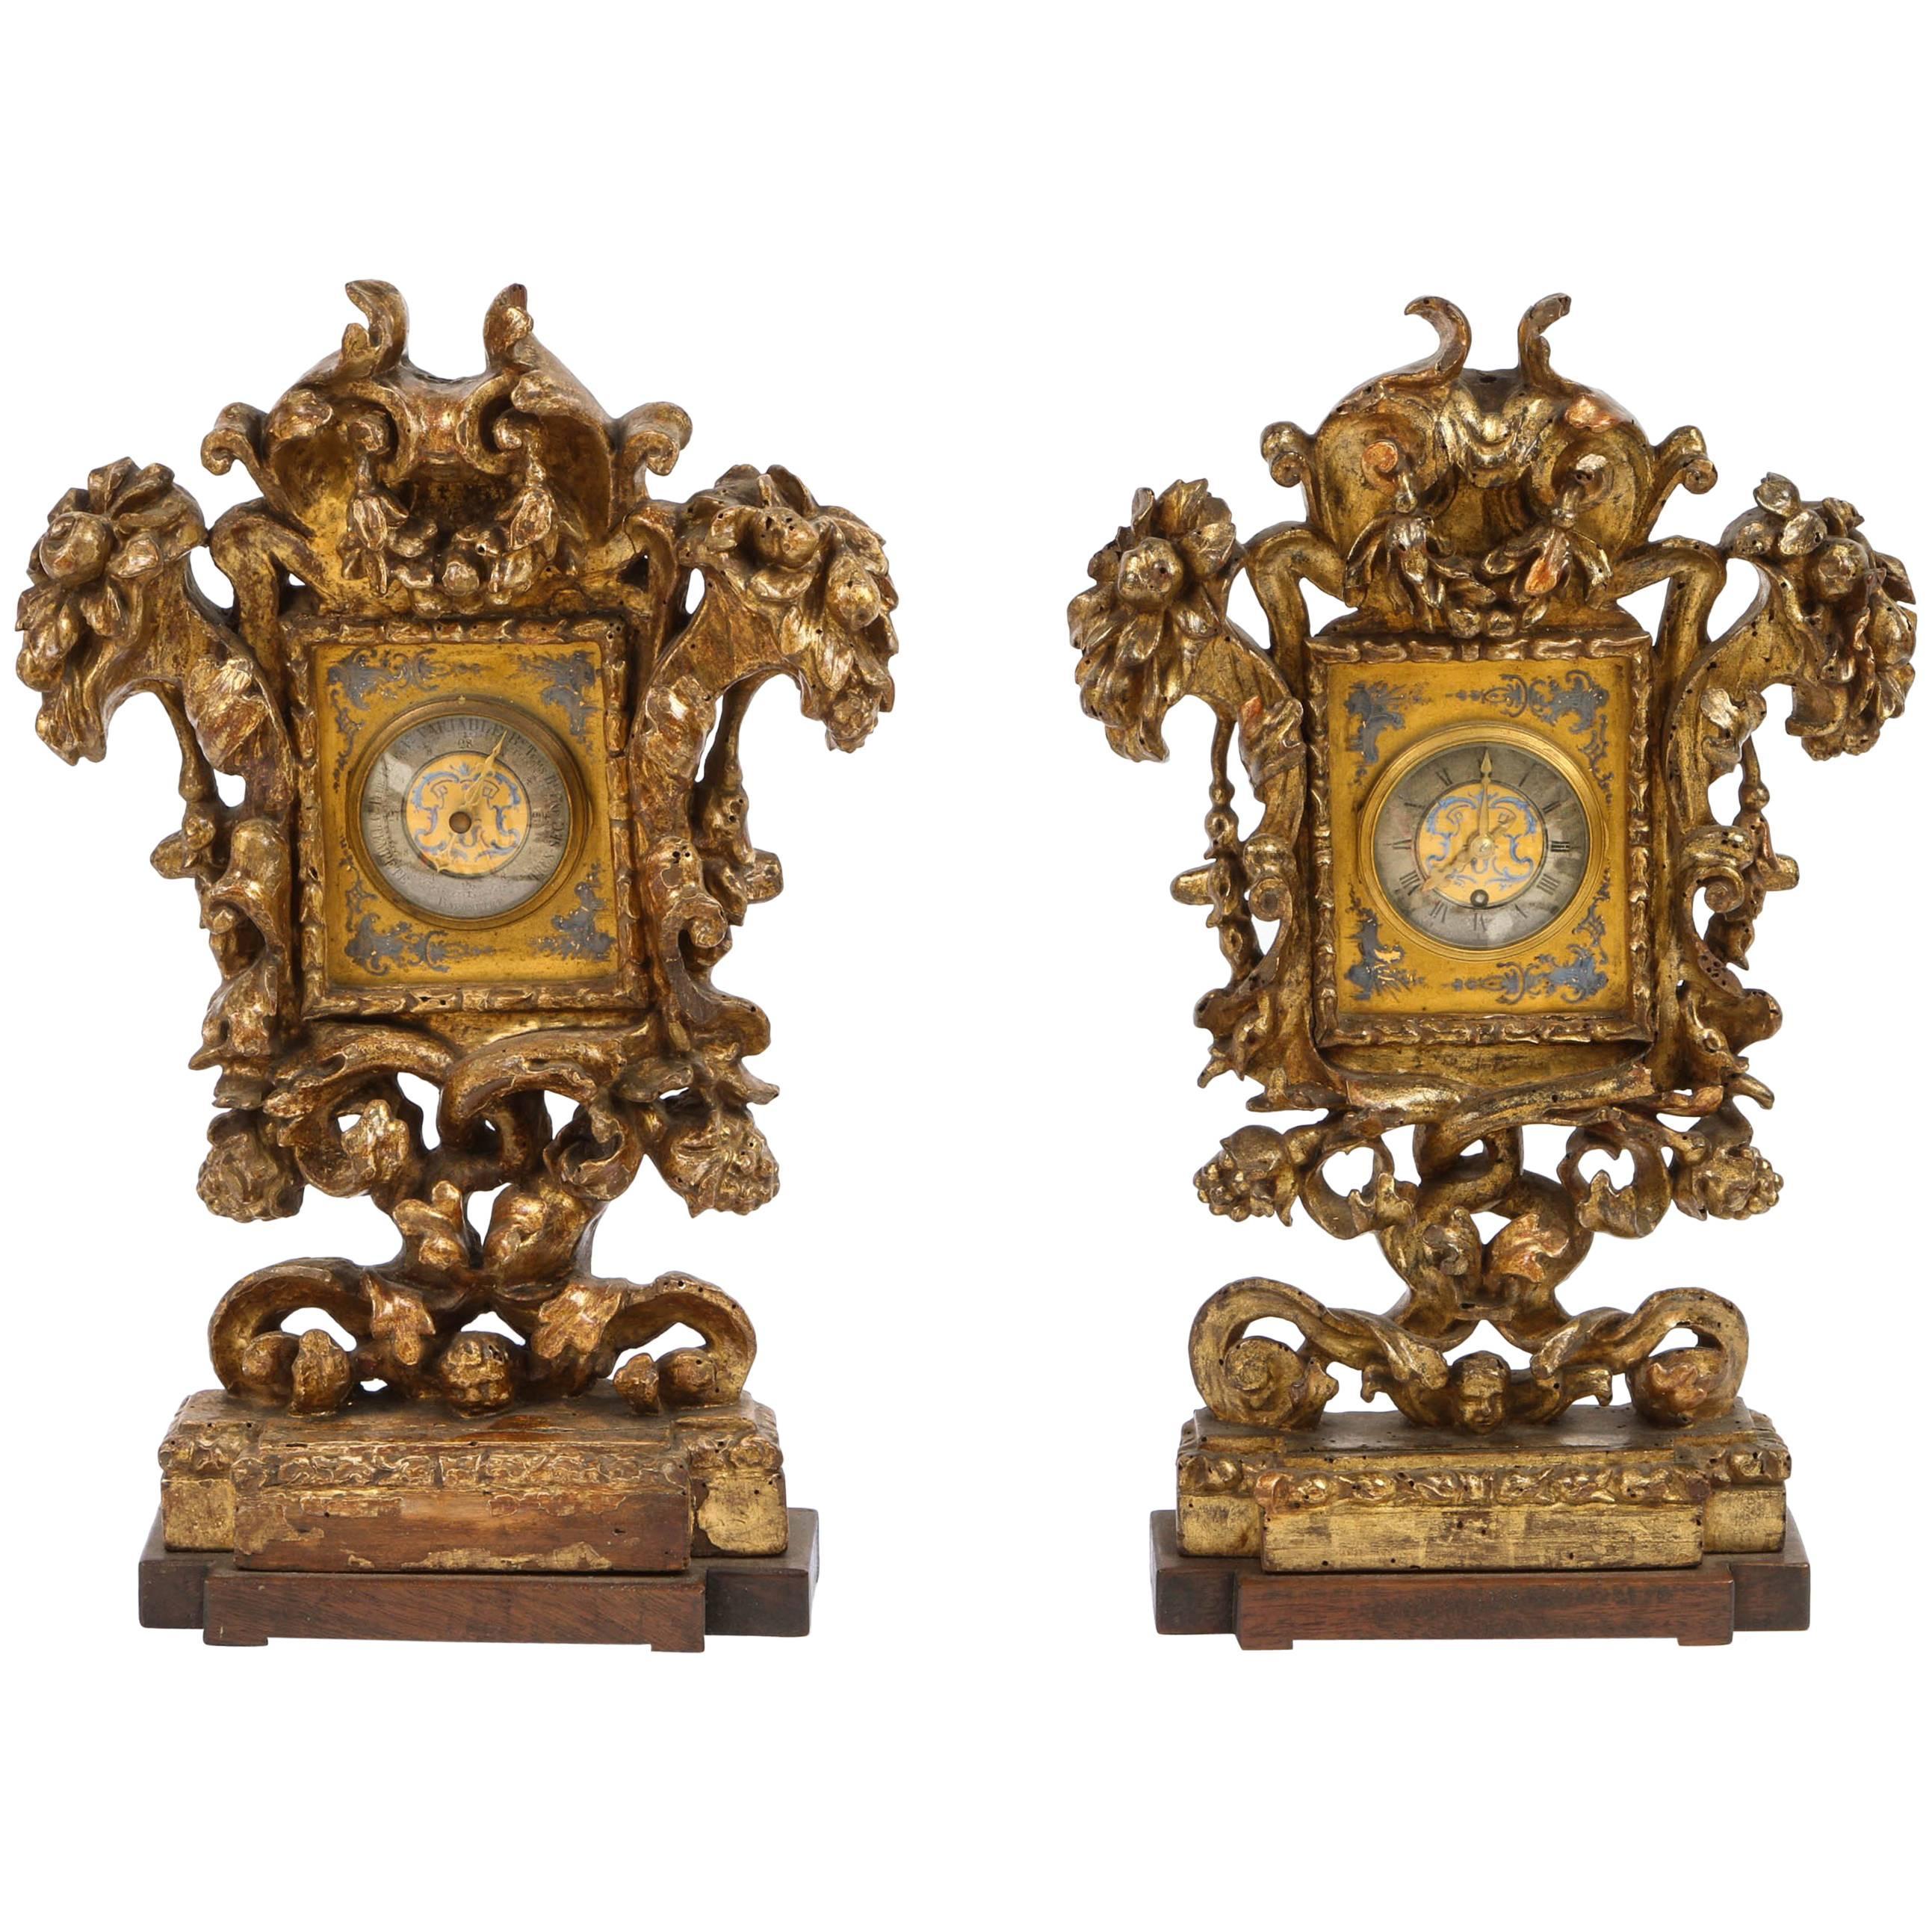 Pair of 18th century Italian Clock and Barometer